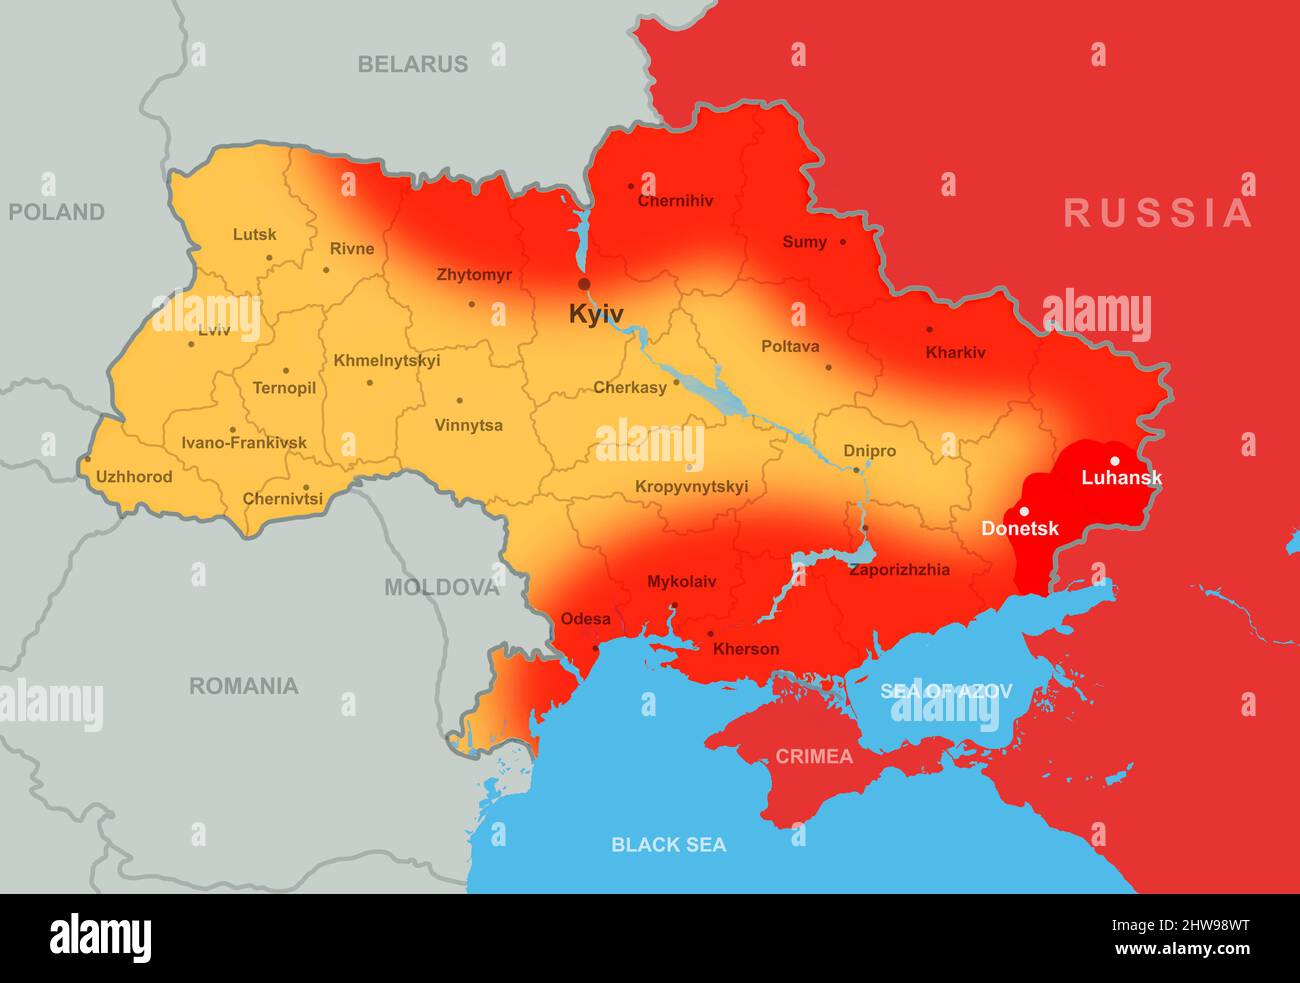 War in Ukraine, territory of Russia and Ukraine on Europe map. Ukrainian borders with Donbass region, Russian invasion in Ukraine on military-politica Stock Photo